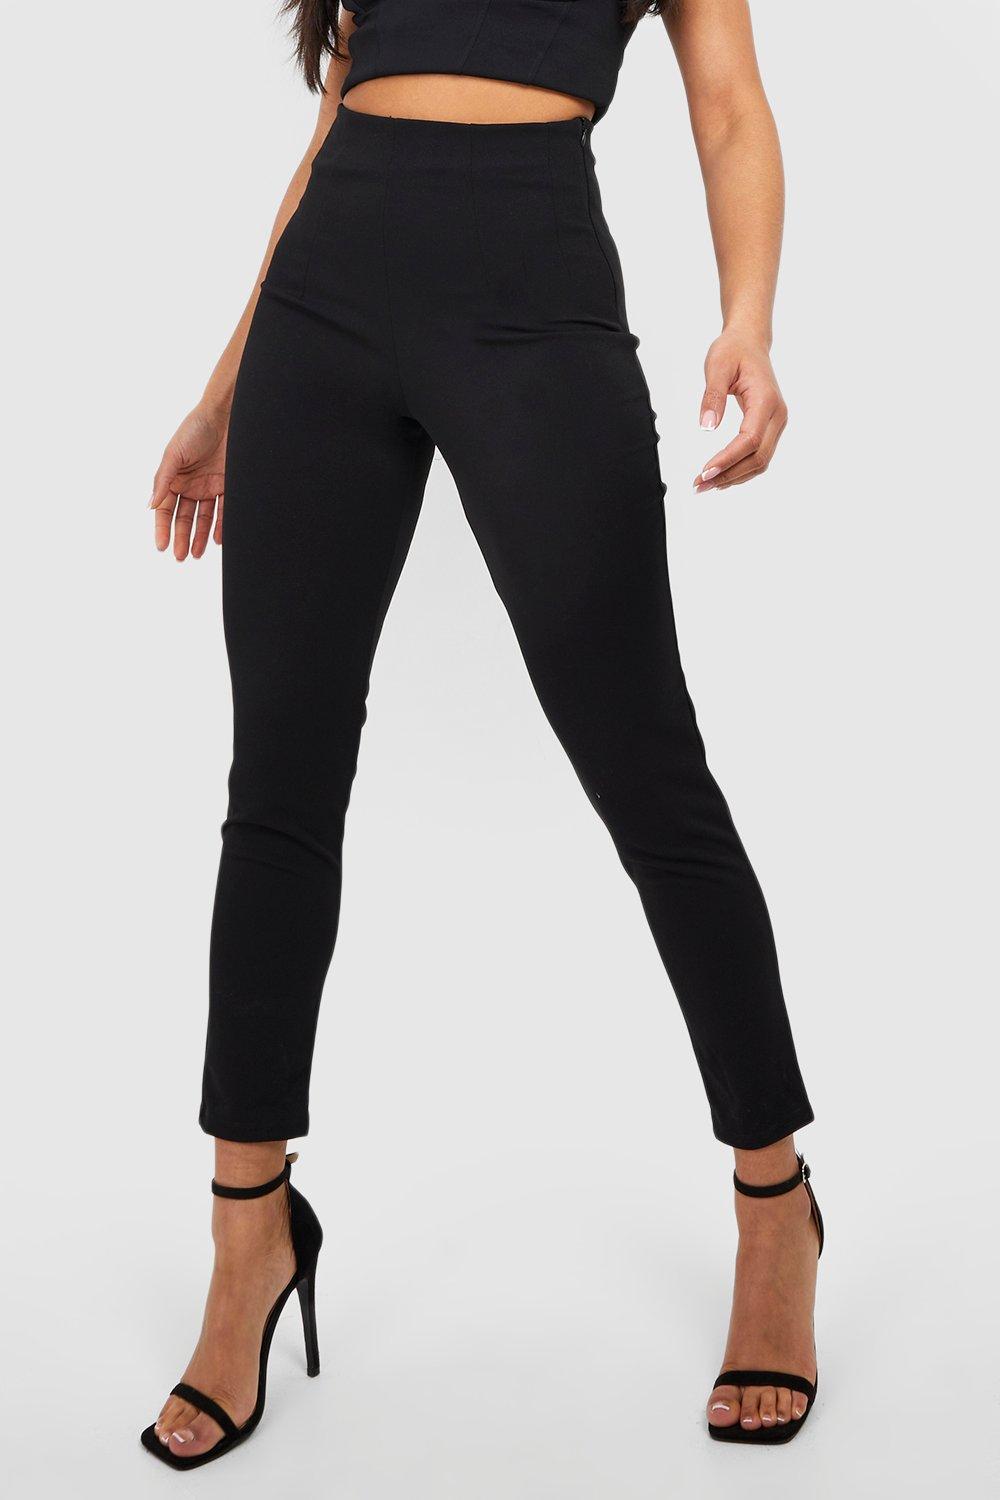 https://media.boohoo.com/i/boohoo/gzz49031_black_xl_3/female-black-ultra-high-waisted-tailored-skinny-pants